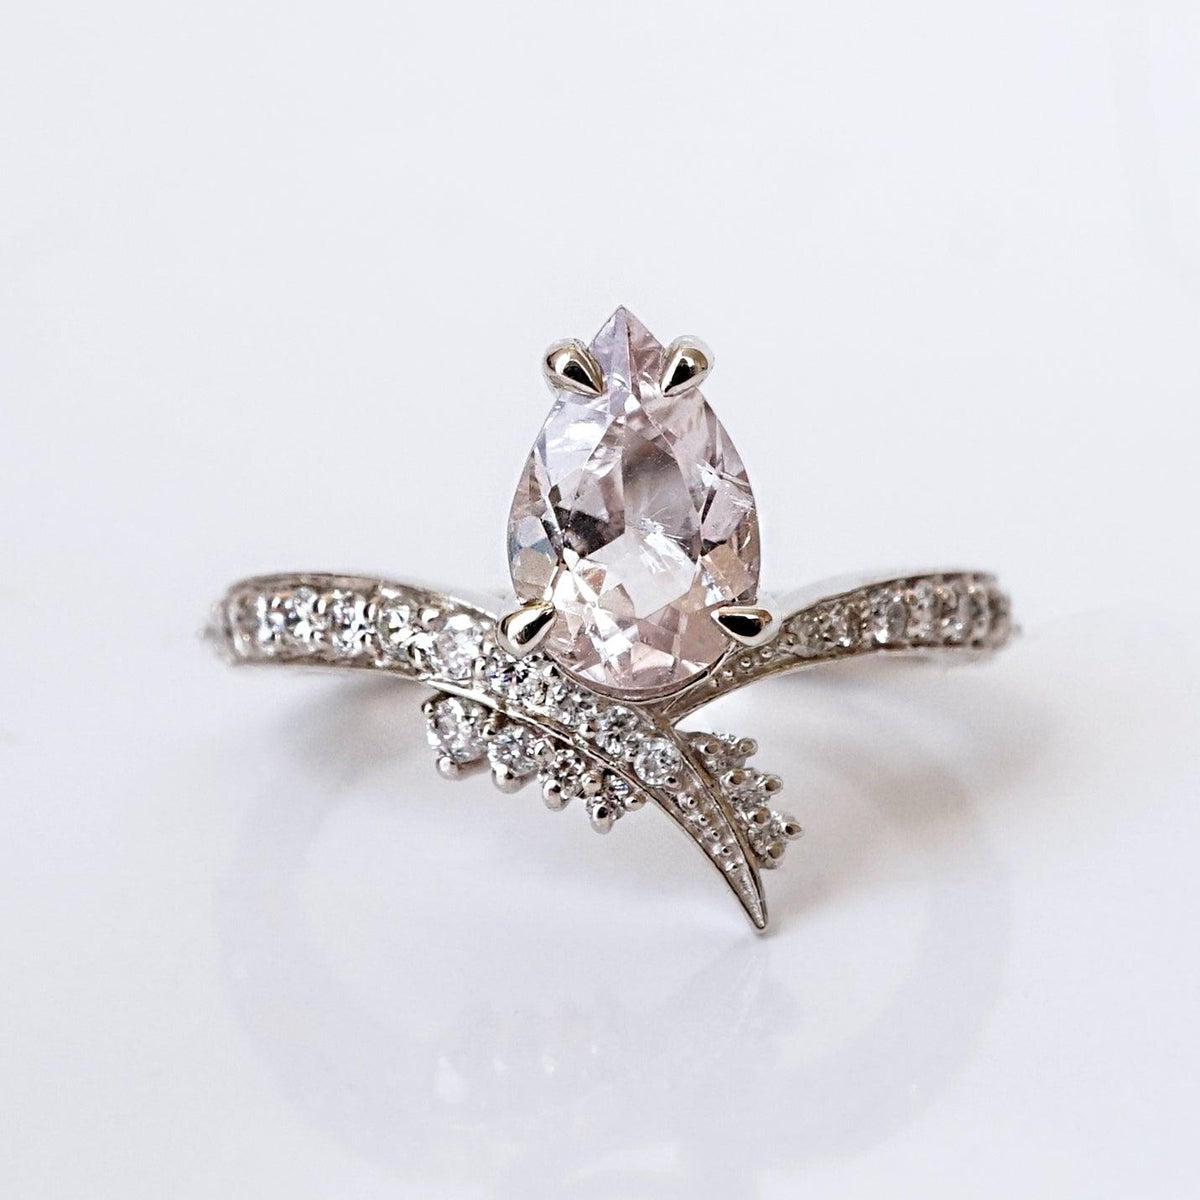 Manhattan Morganite Diamond Ring in 14K and 18K Gold - Tippy Taste Jewelry